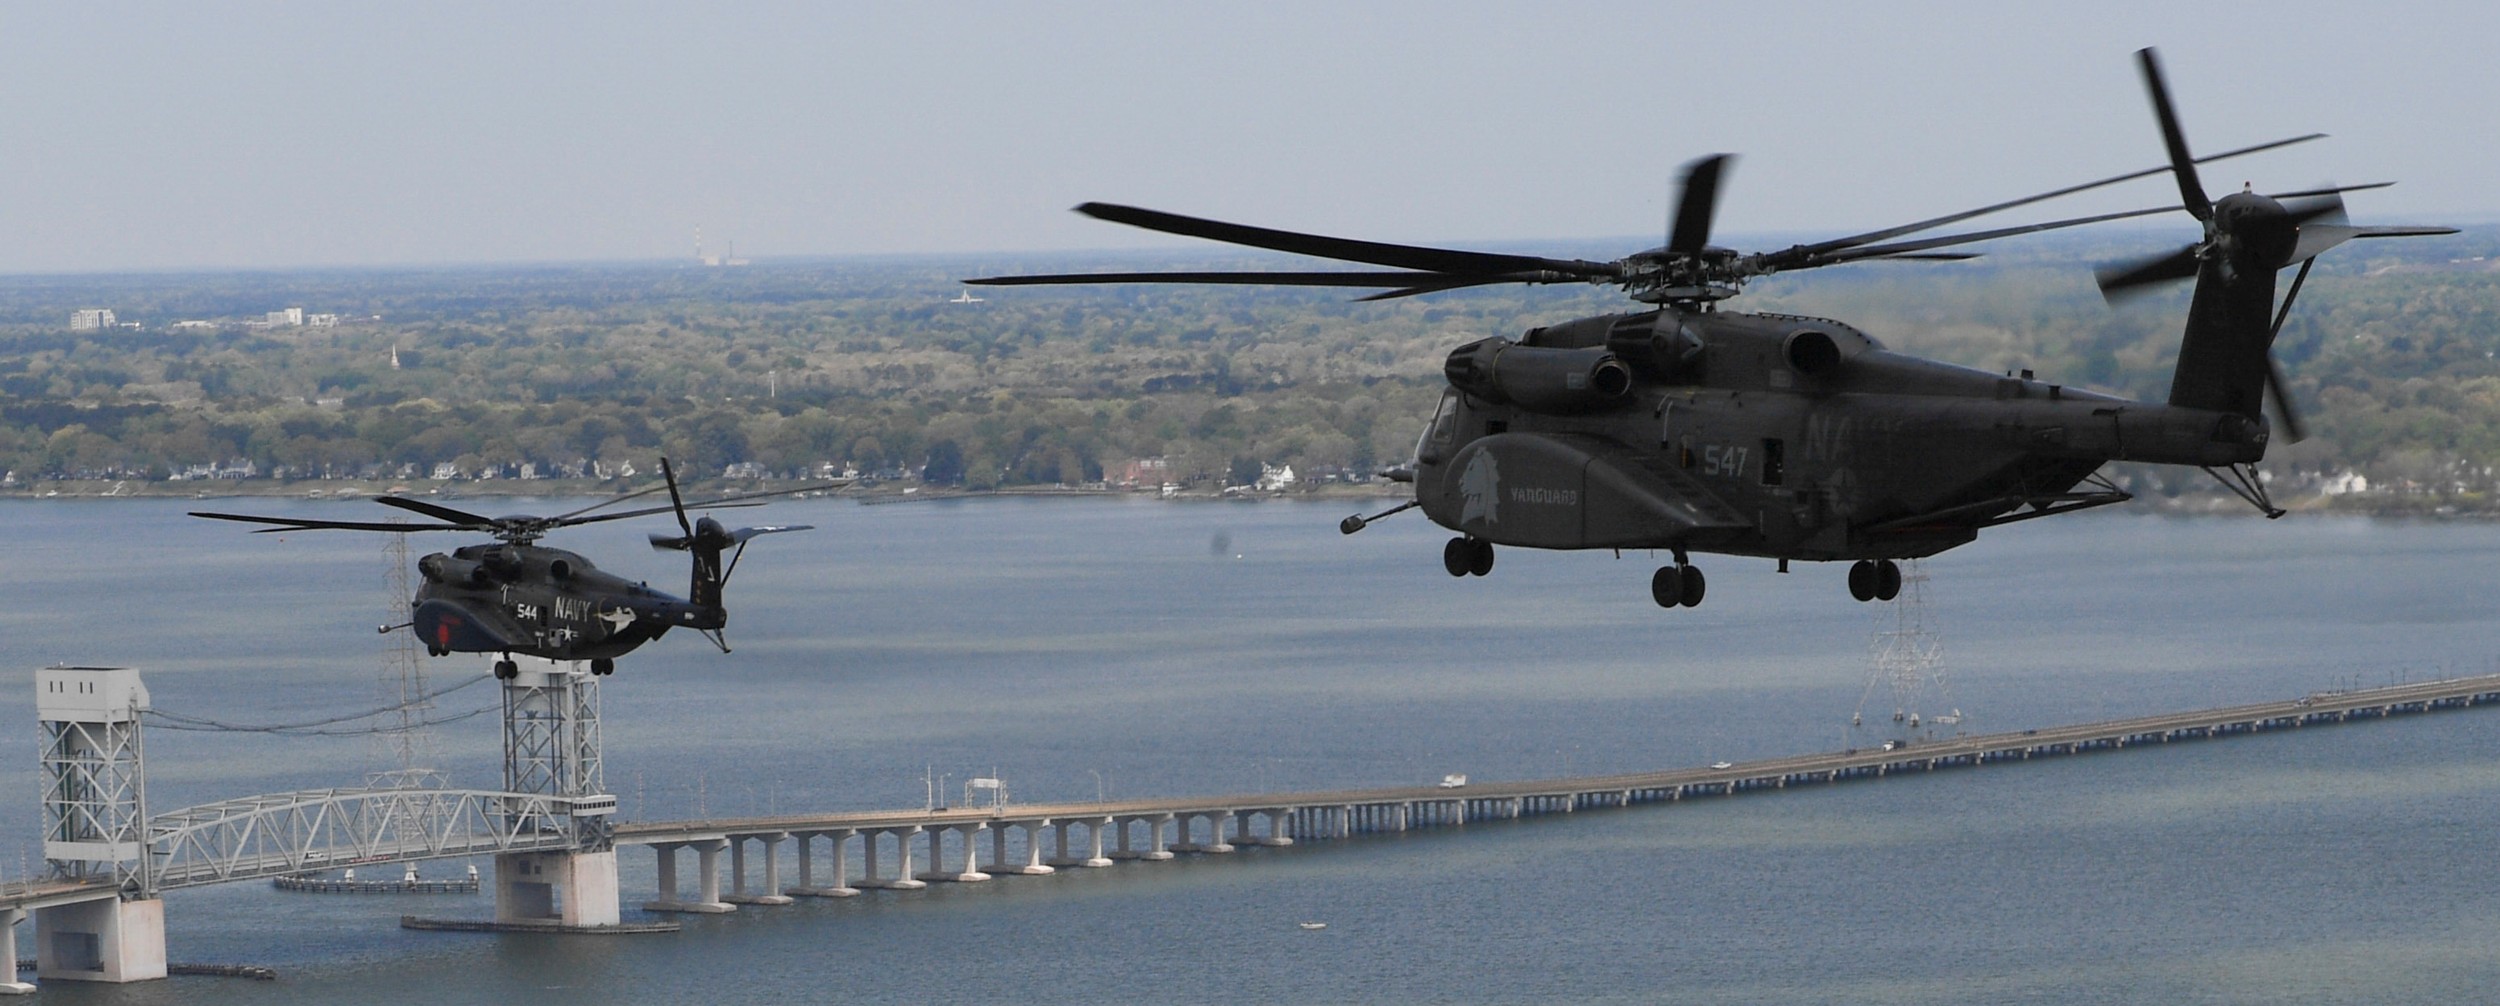 hm-14 vanguard helicopter mine countermeasures squadron navy mh-53e sea dragon 17